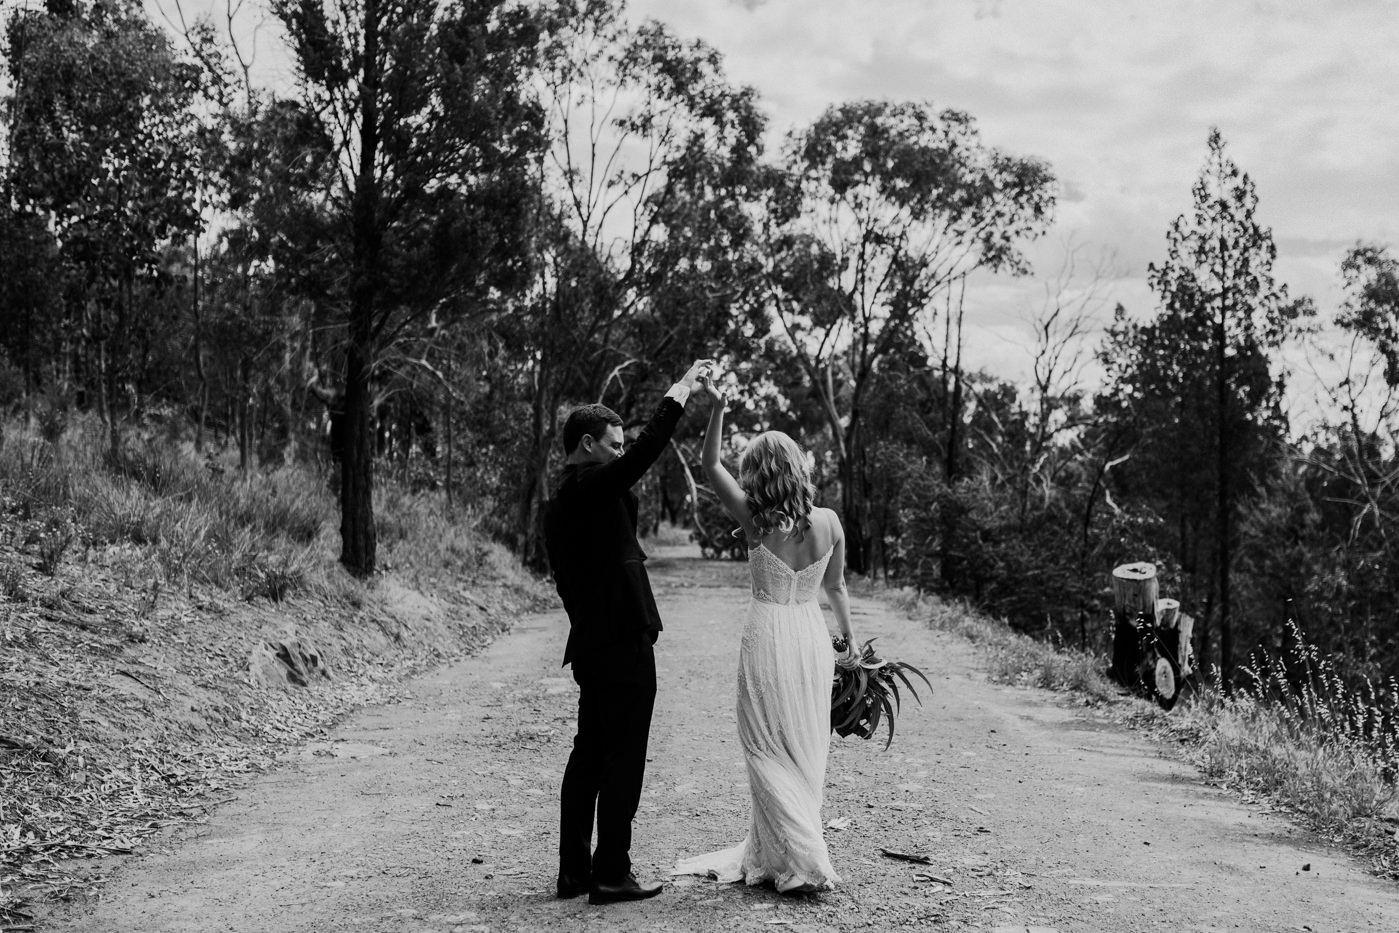 Anthony & Eliet - Wagga Wagga Wedding - Country NSW - Samantha Heather Photography-55.jpg